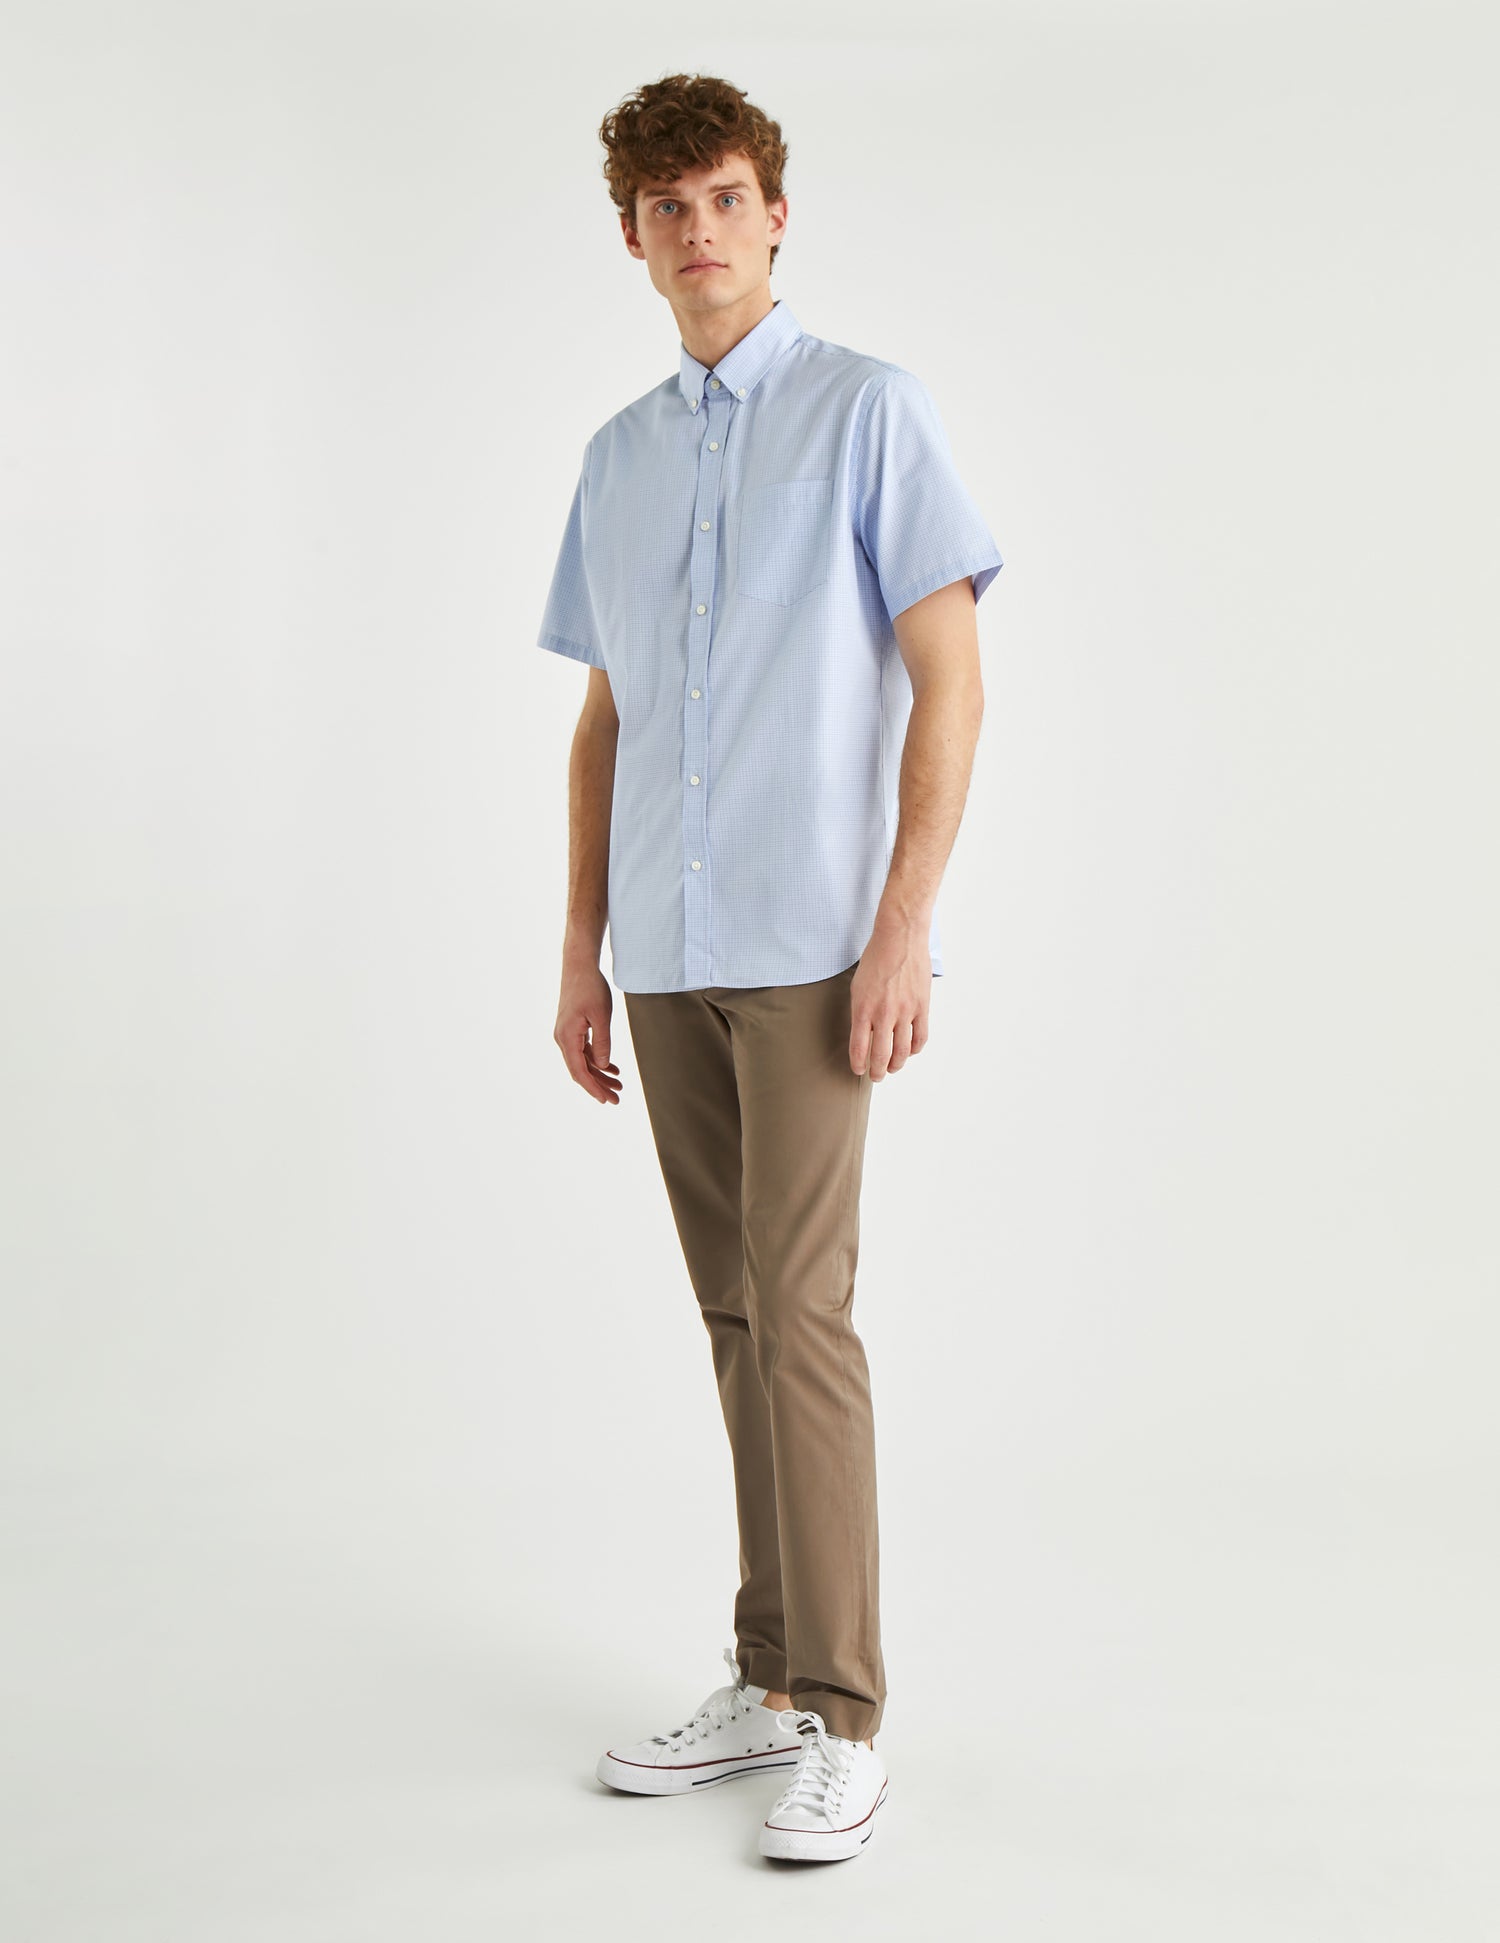 Classic short sleeve blue checked shirt - Poplin - American Collar#5